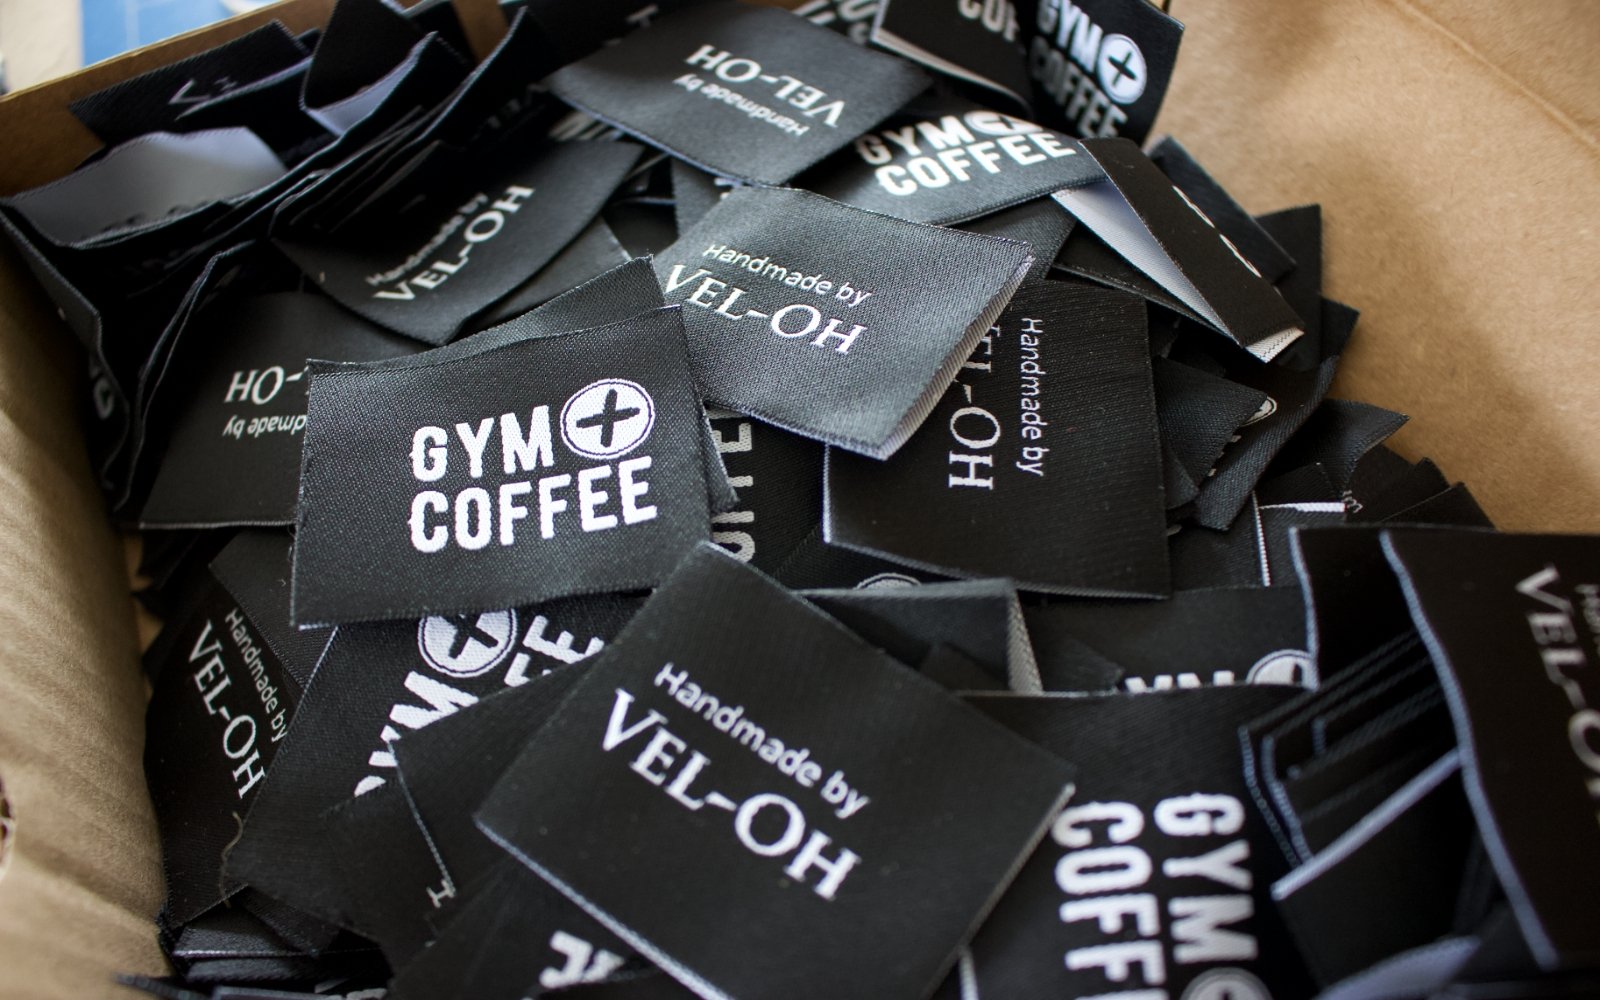 Gym + Coffee bag collaboration | Vel-Oh